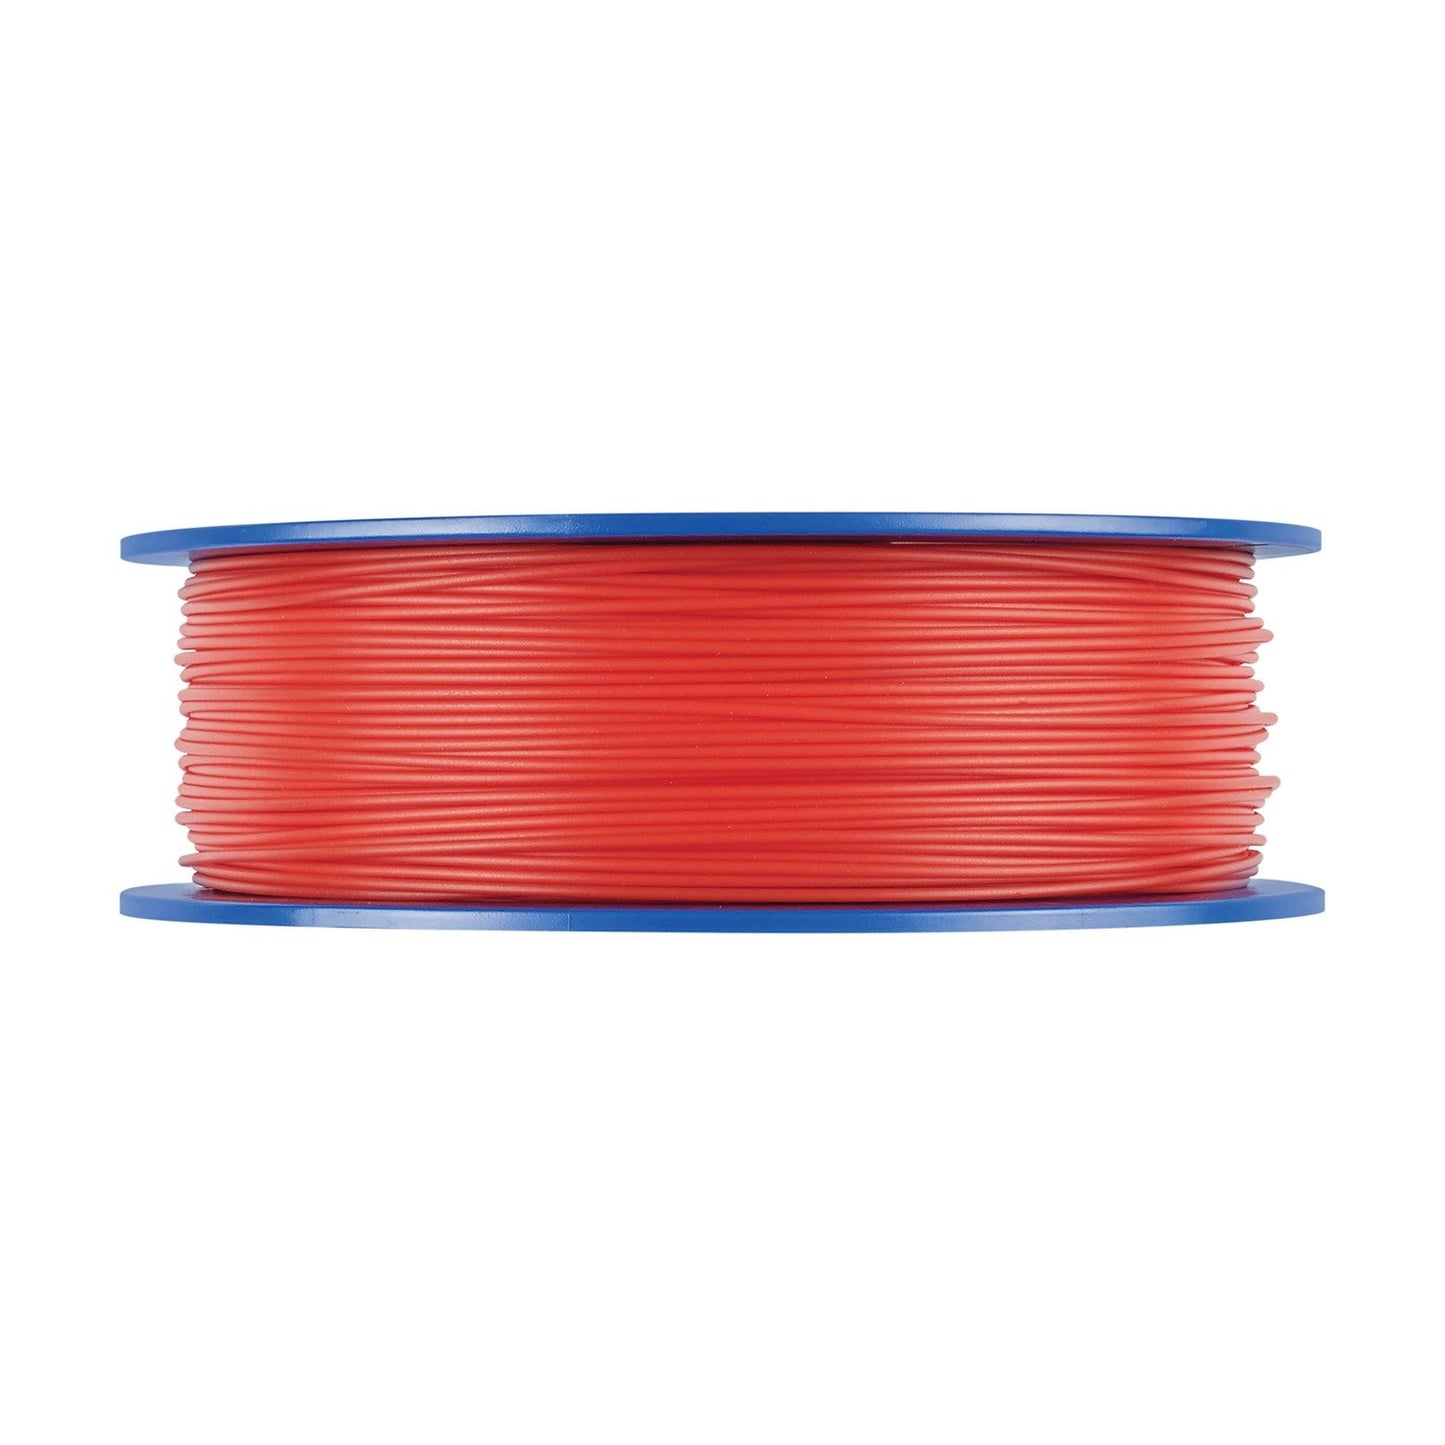 Dremel PLA-RED-01 .75 kg PLA 3D Printer Filament (Red)